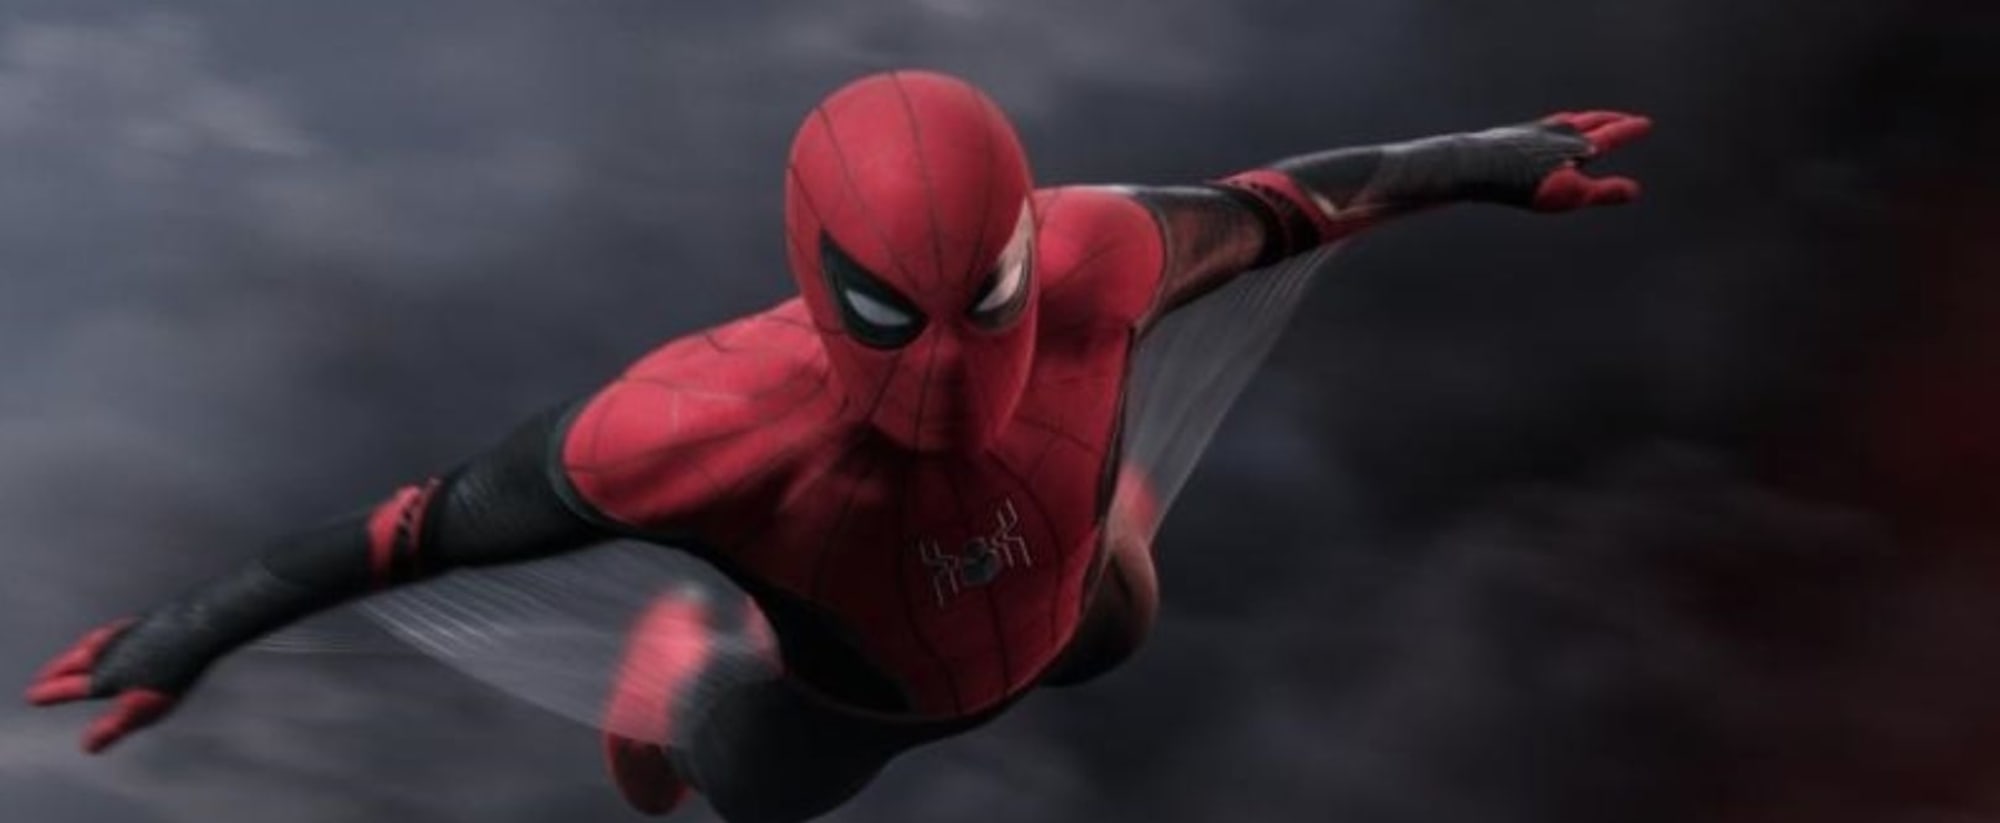 the amazing spider man full movie free watch online